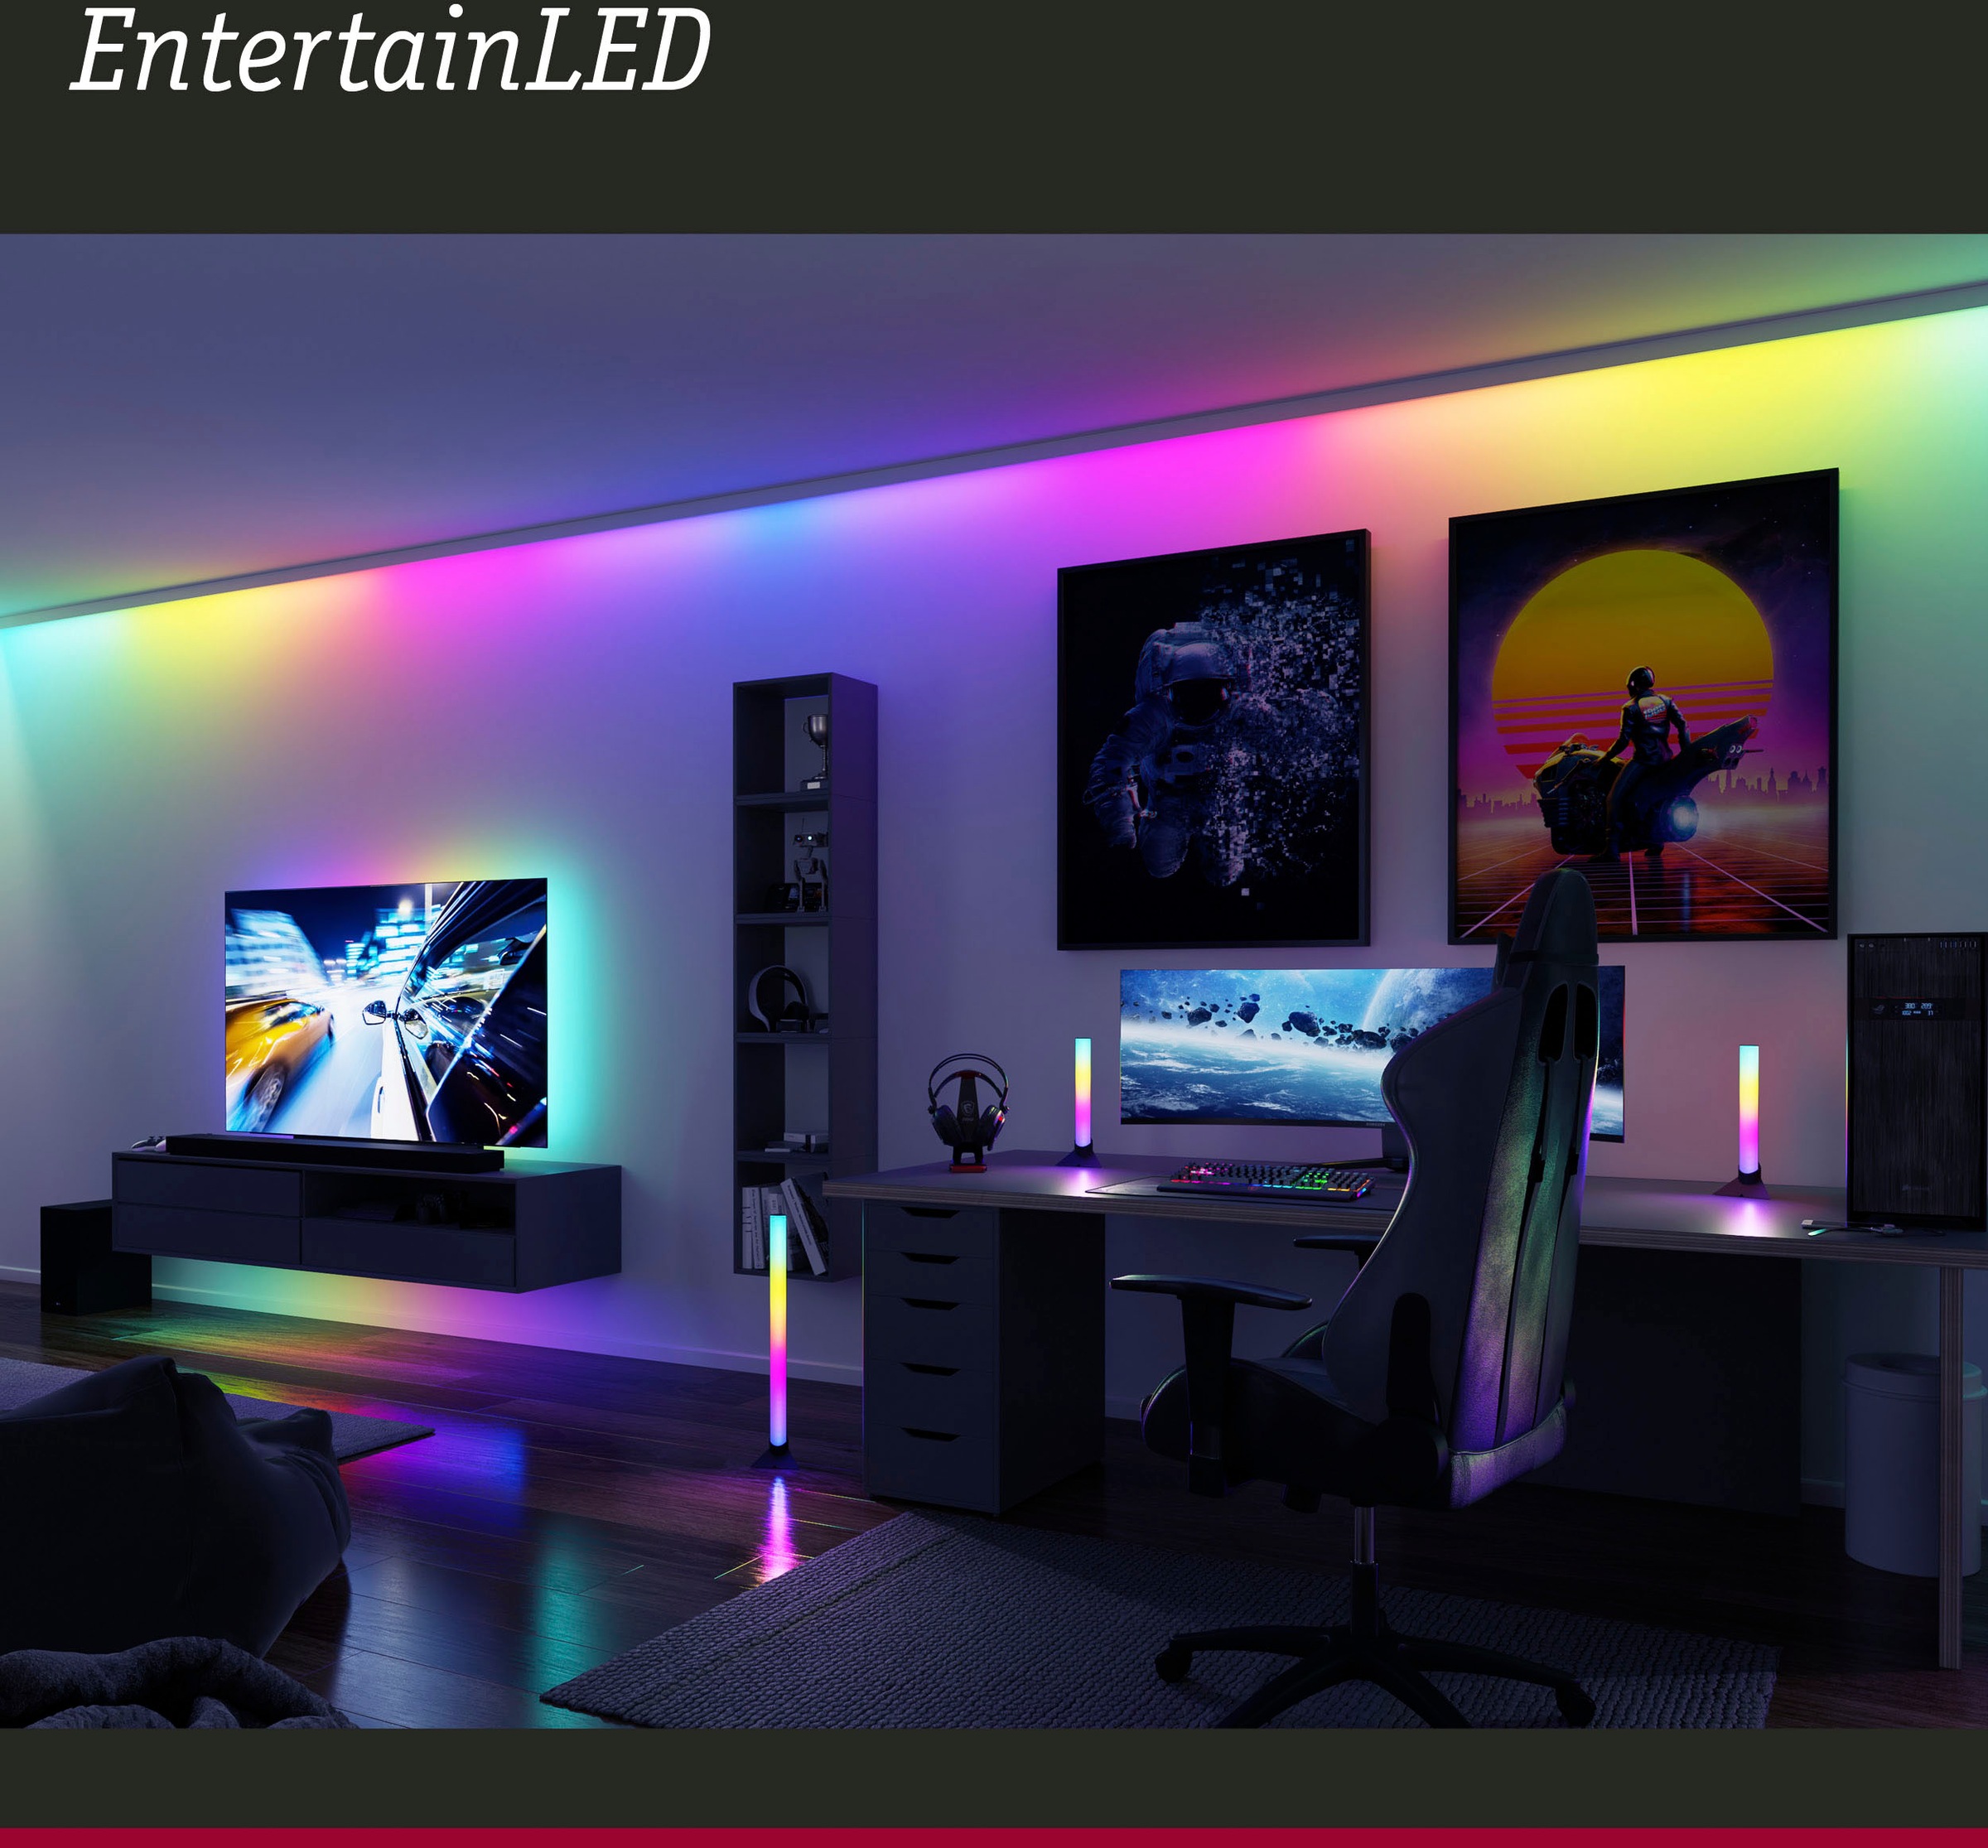 St.-flammig Dynamic Rainbow Paulmann 2x48lm«, 2x1W RGB 30x30mm kaufen 2 LED-Streifen »EntertainLED Lightbar